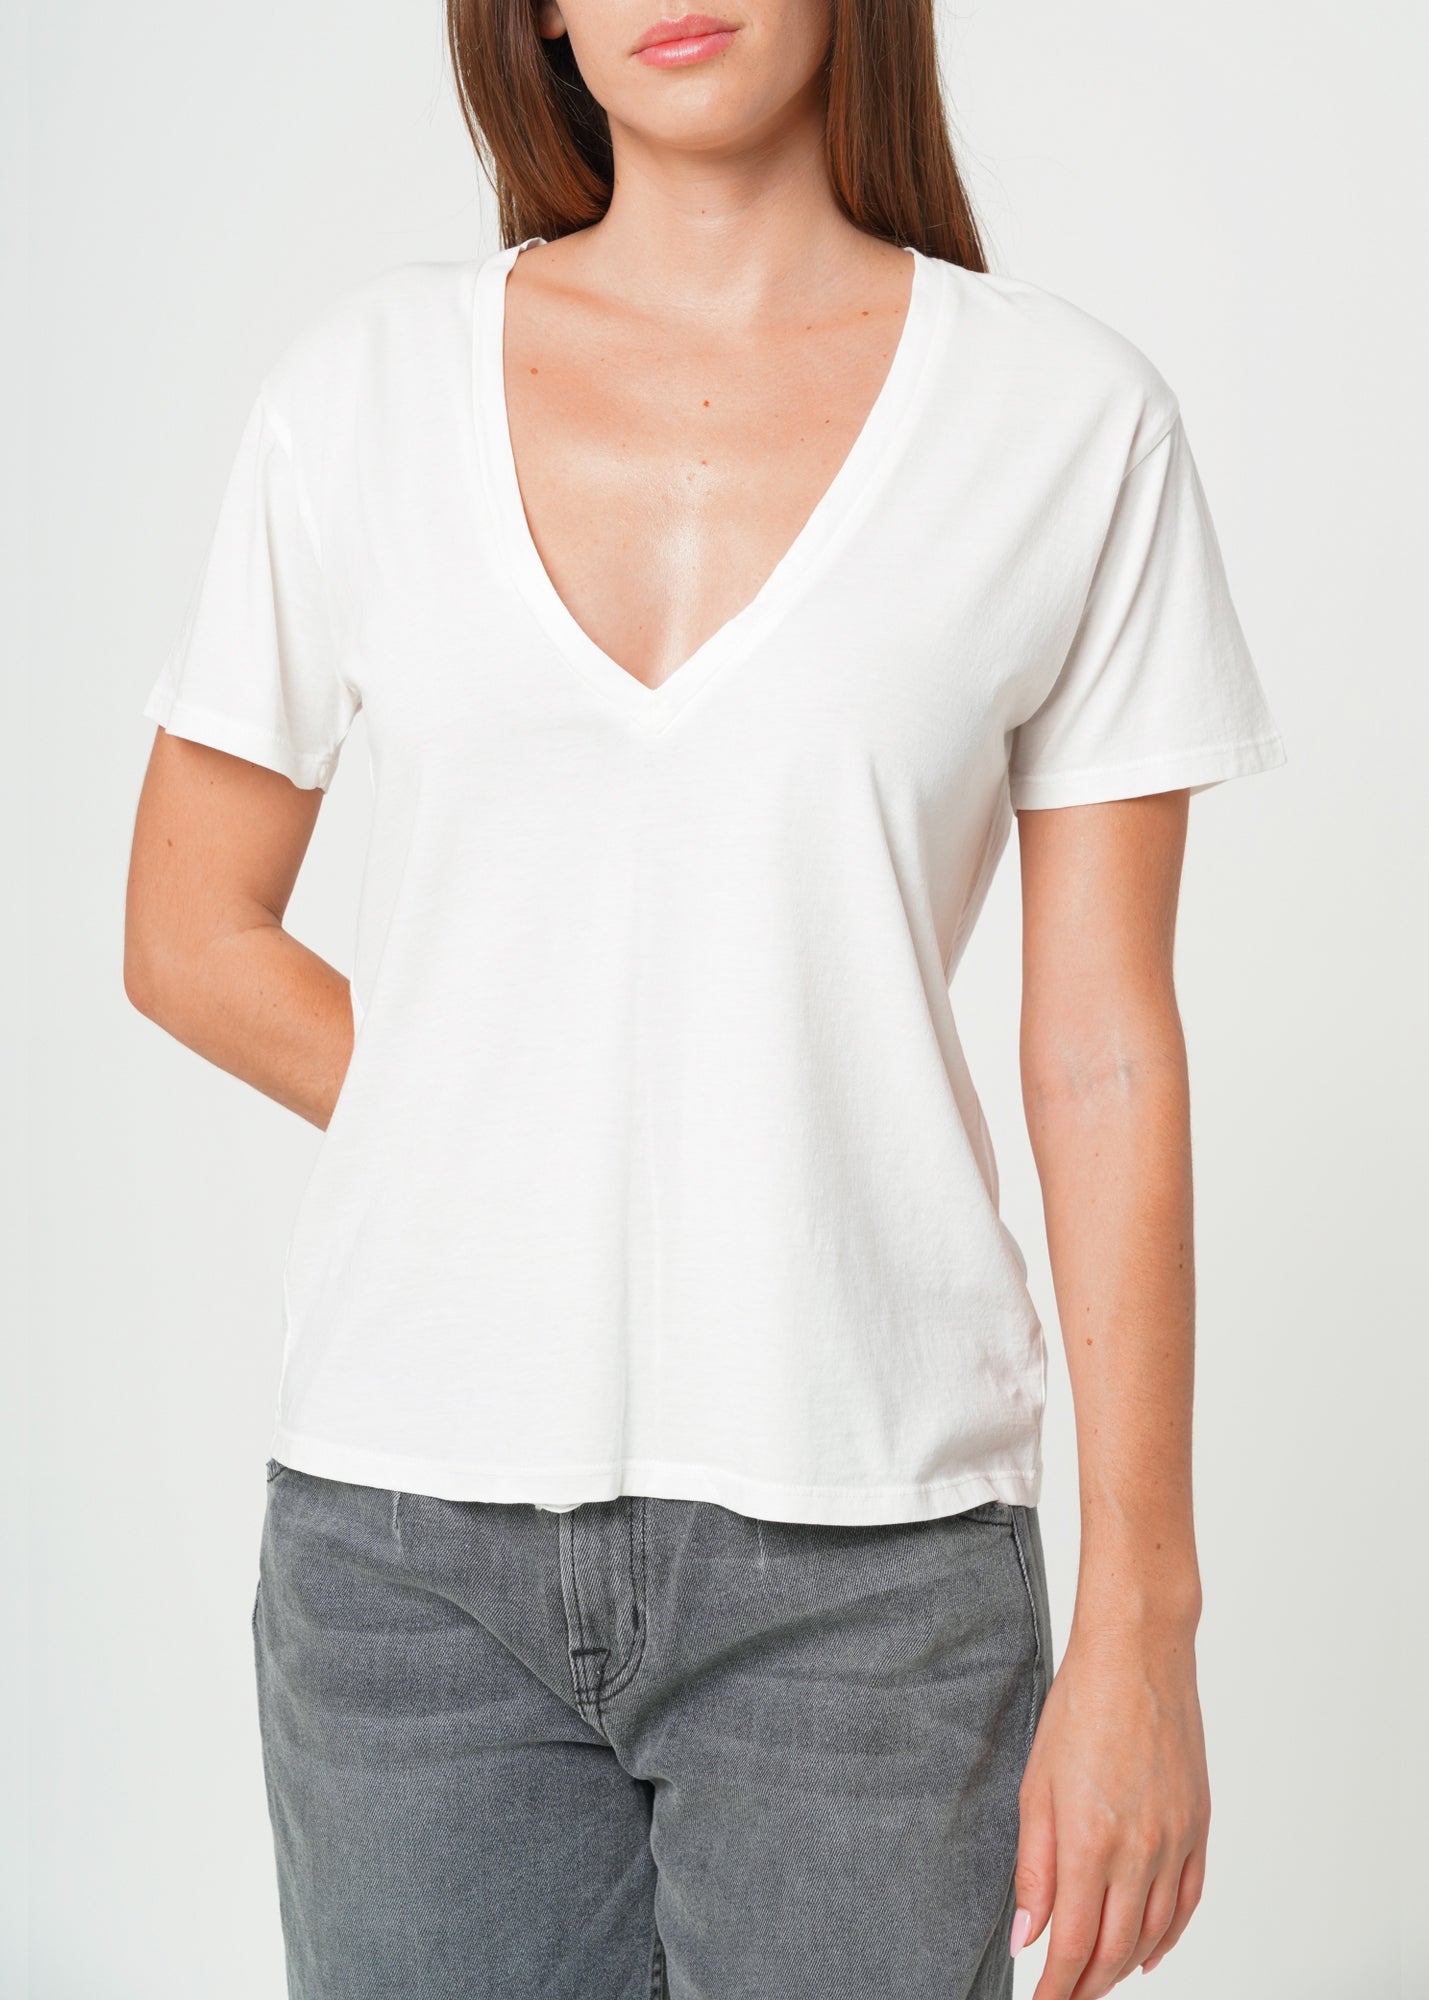 Fitted Deep V Neck T Shirt - White